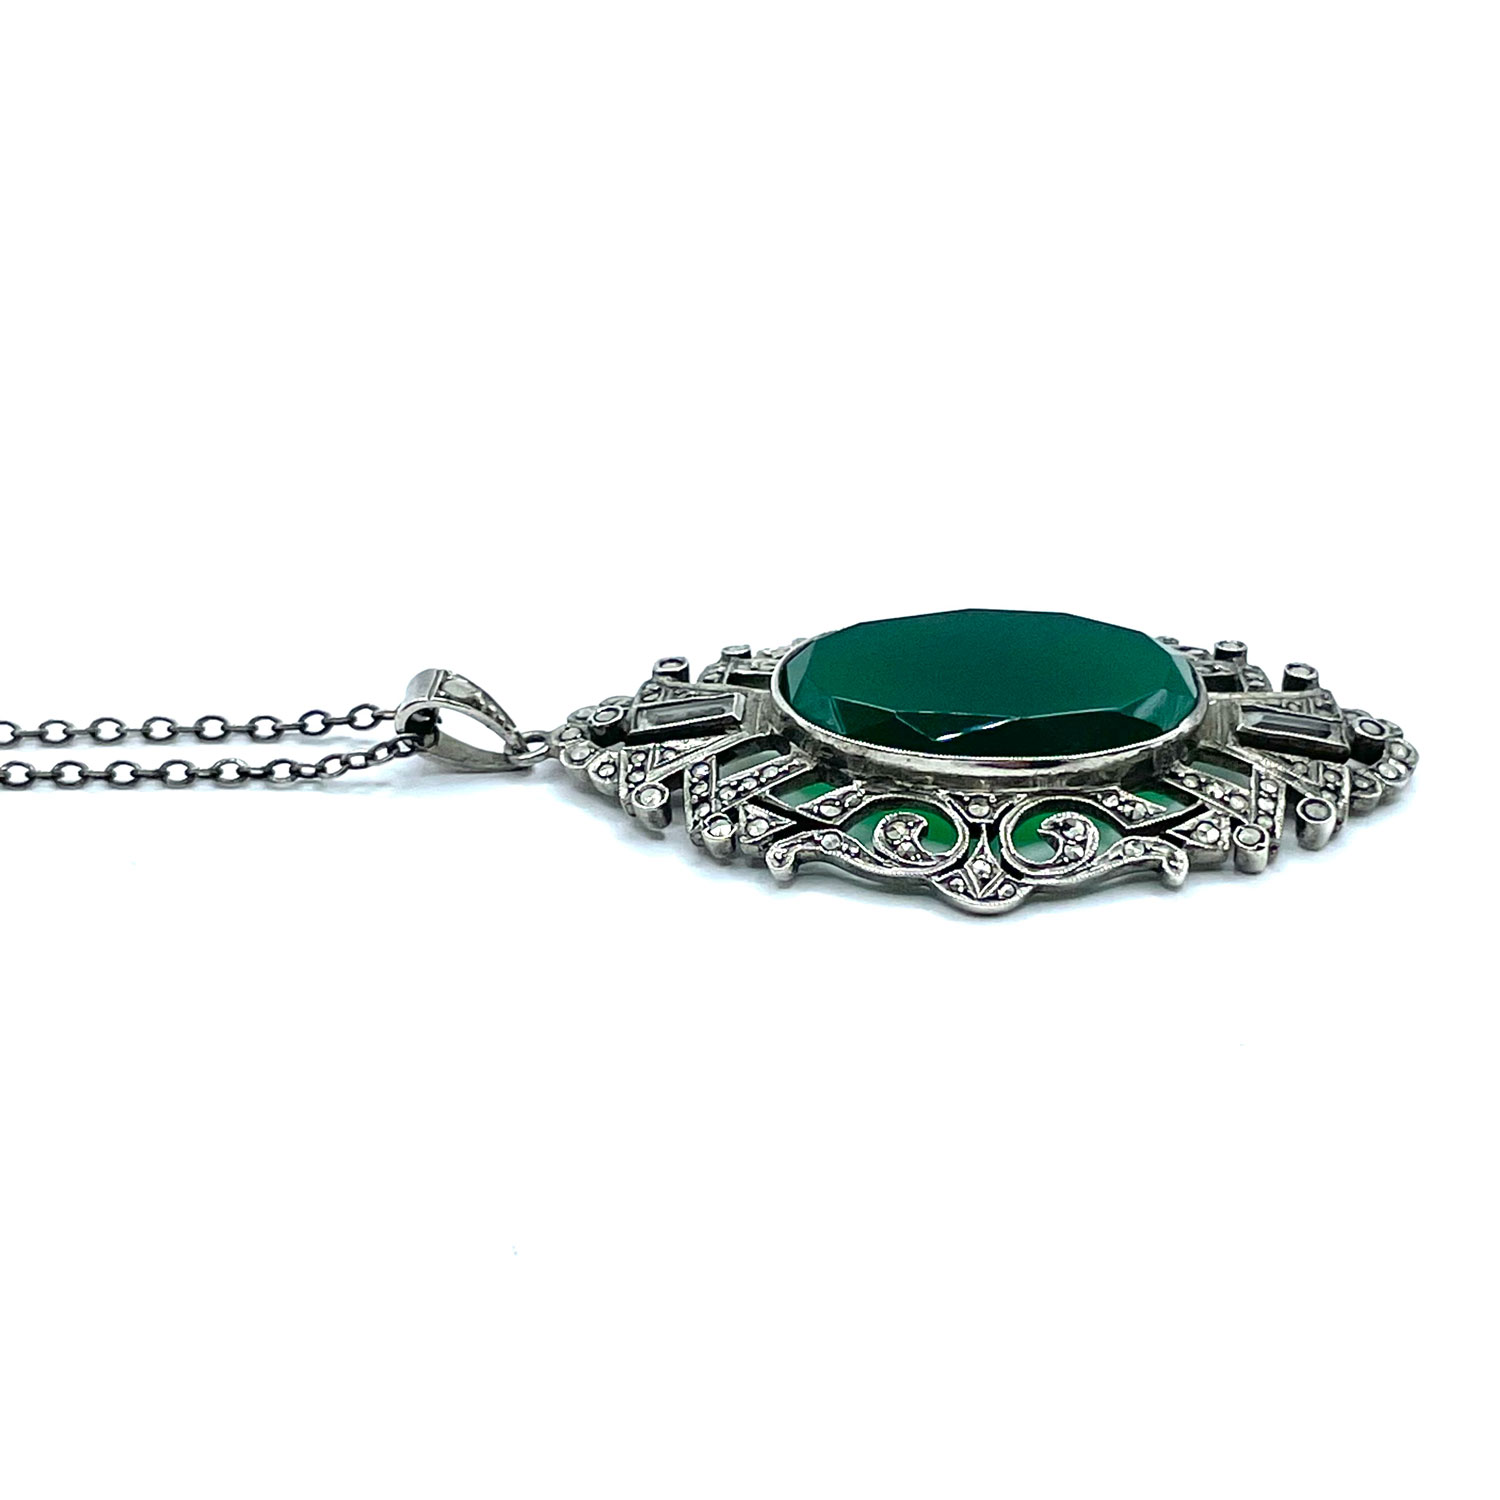 1920s Art Deco chrysoprase necklace